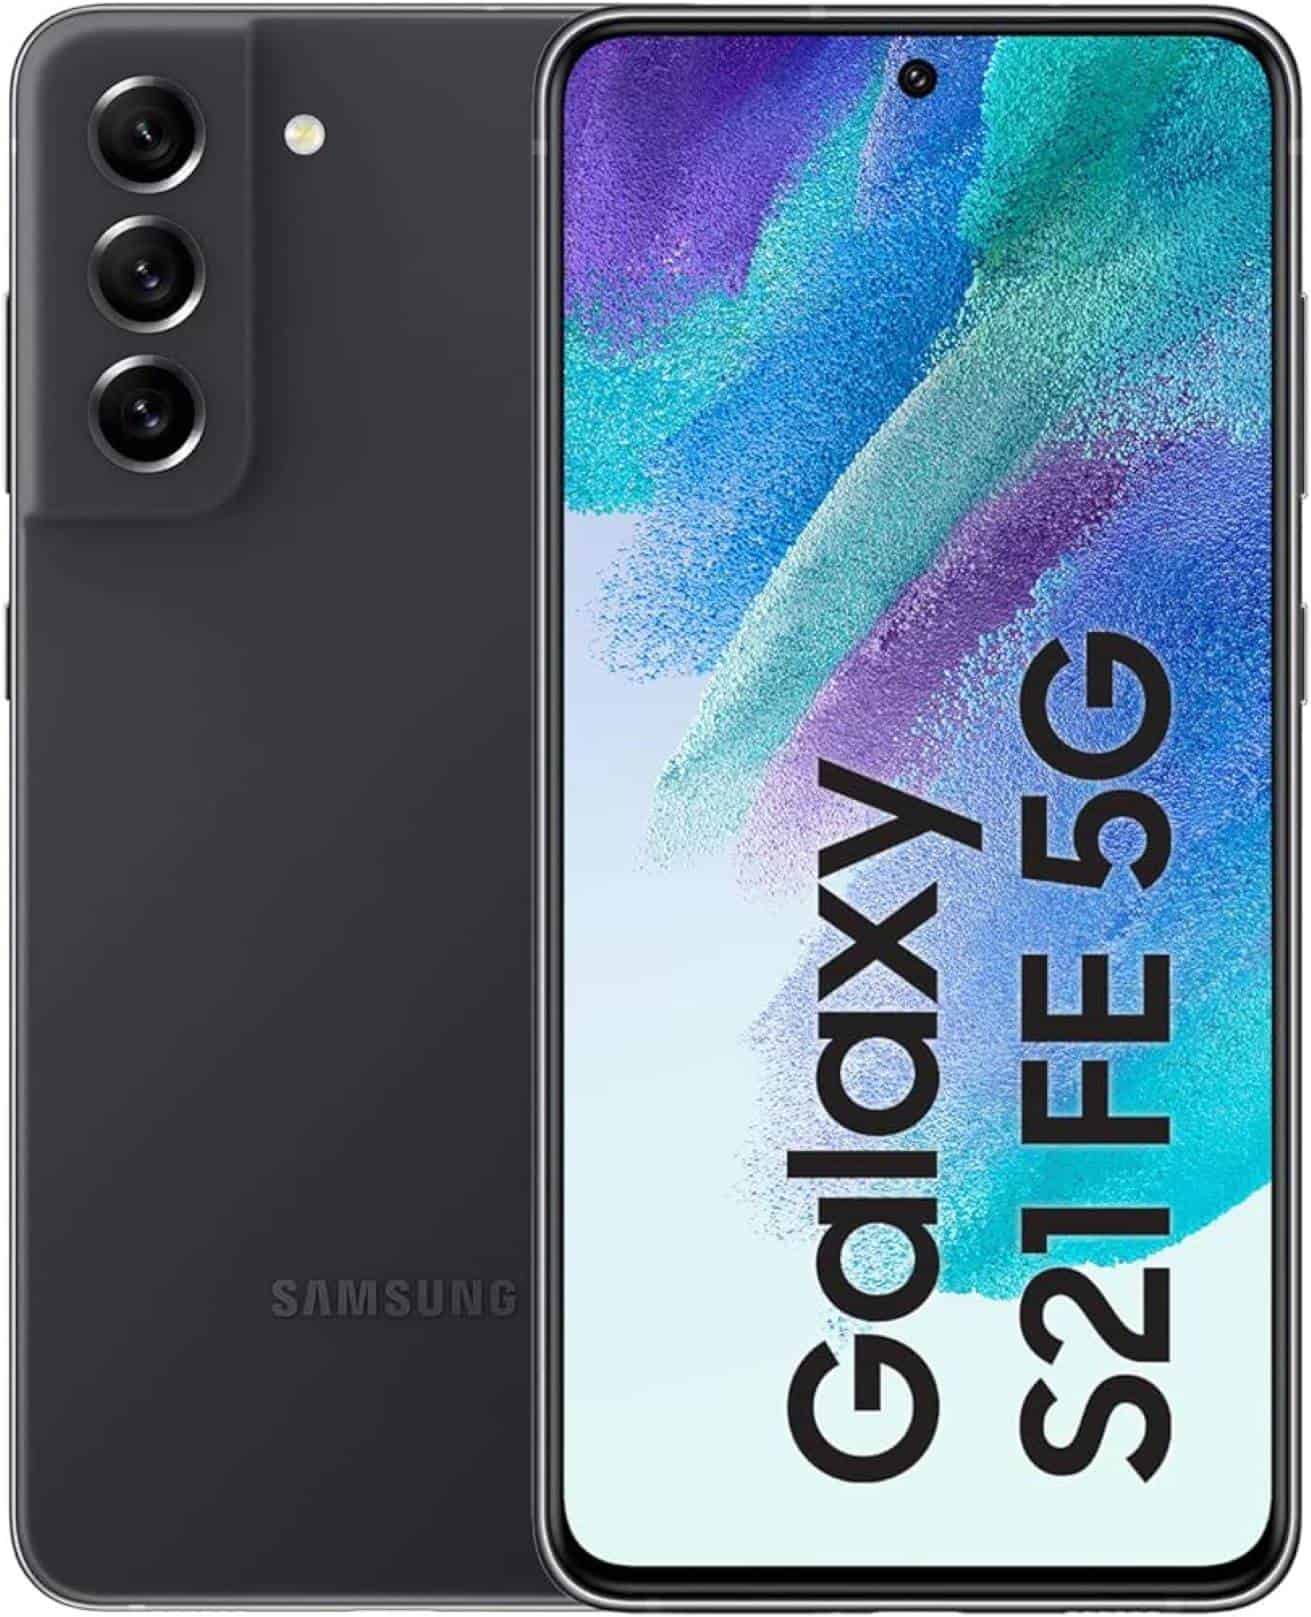 Samsung Galaxy S21 FE con pantalla AMOLED